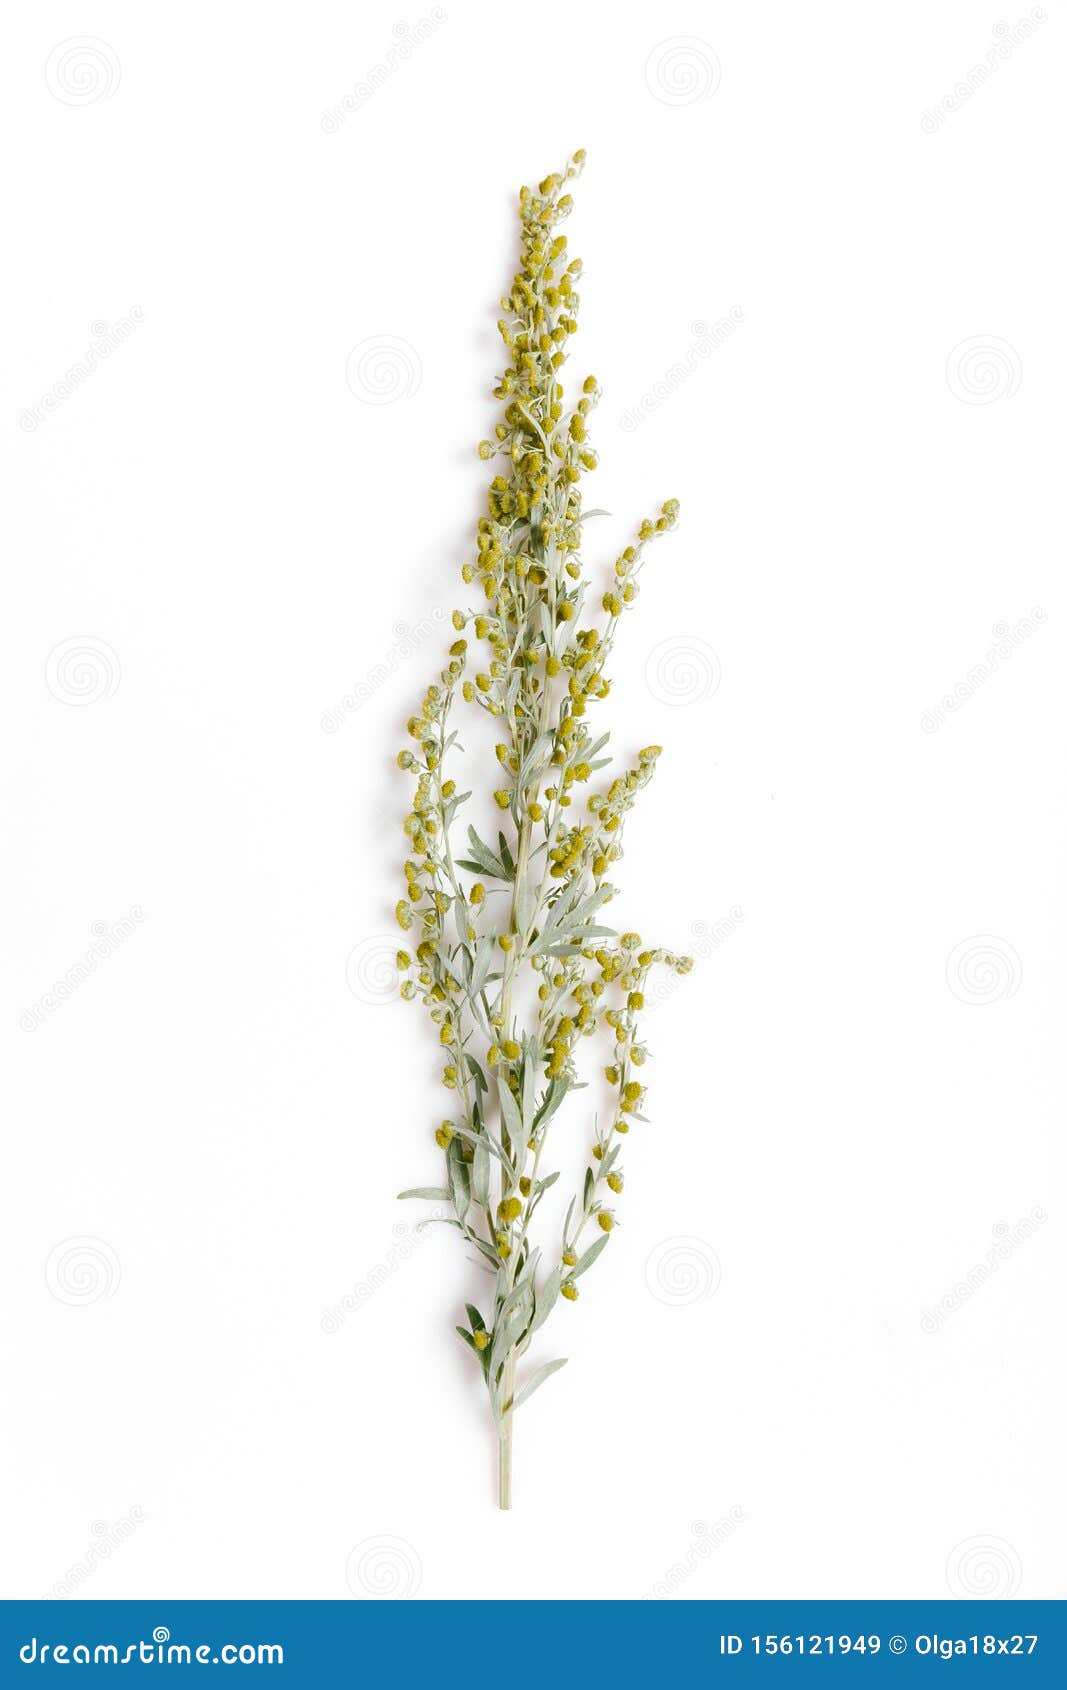 medicinal herbs, sagebrush, artemisia, mugwort on a white background.